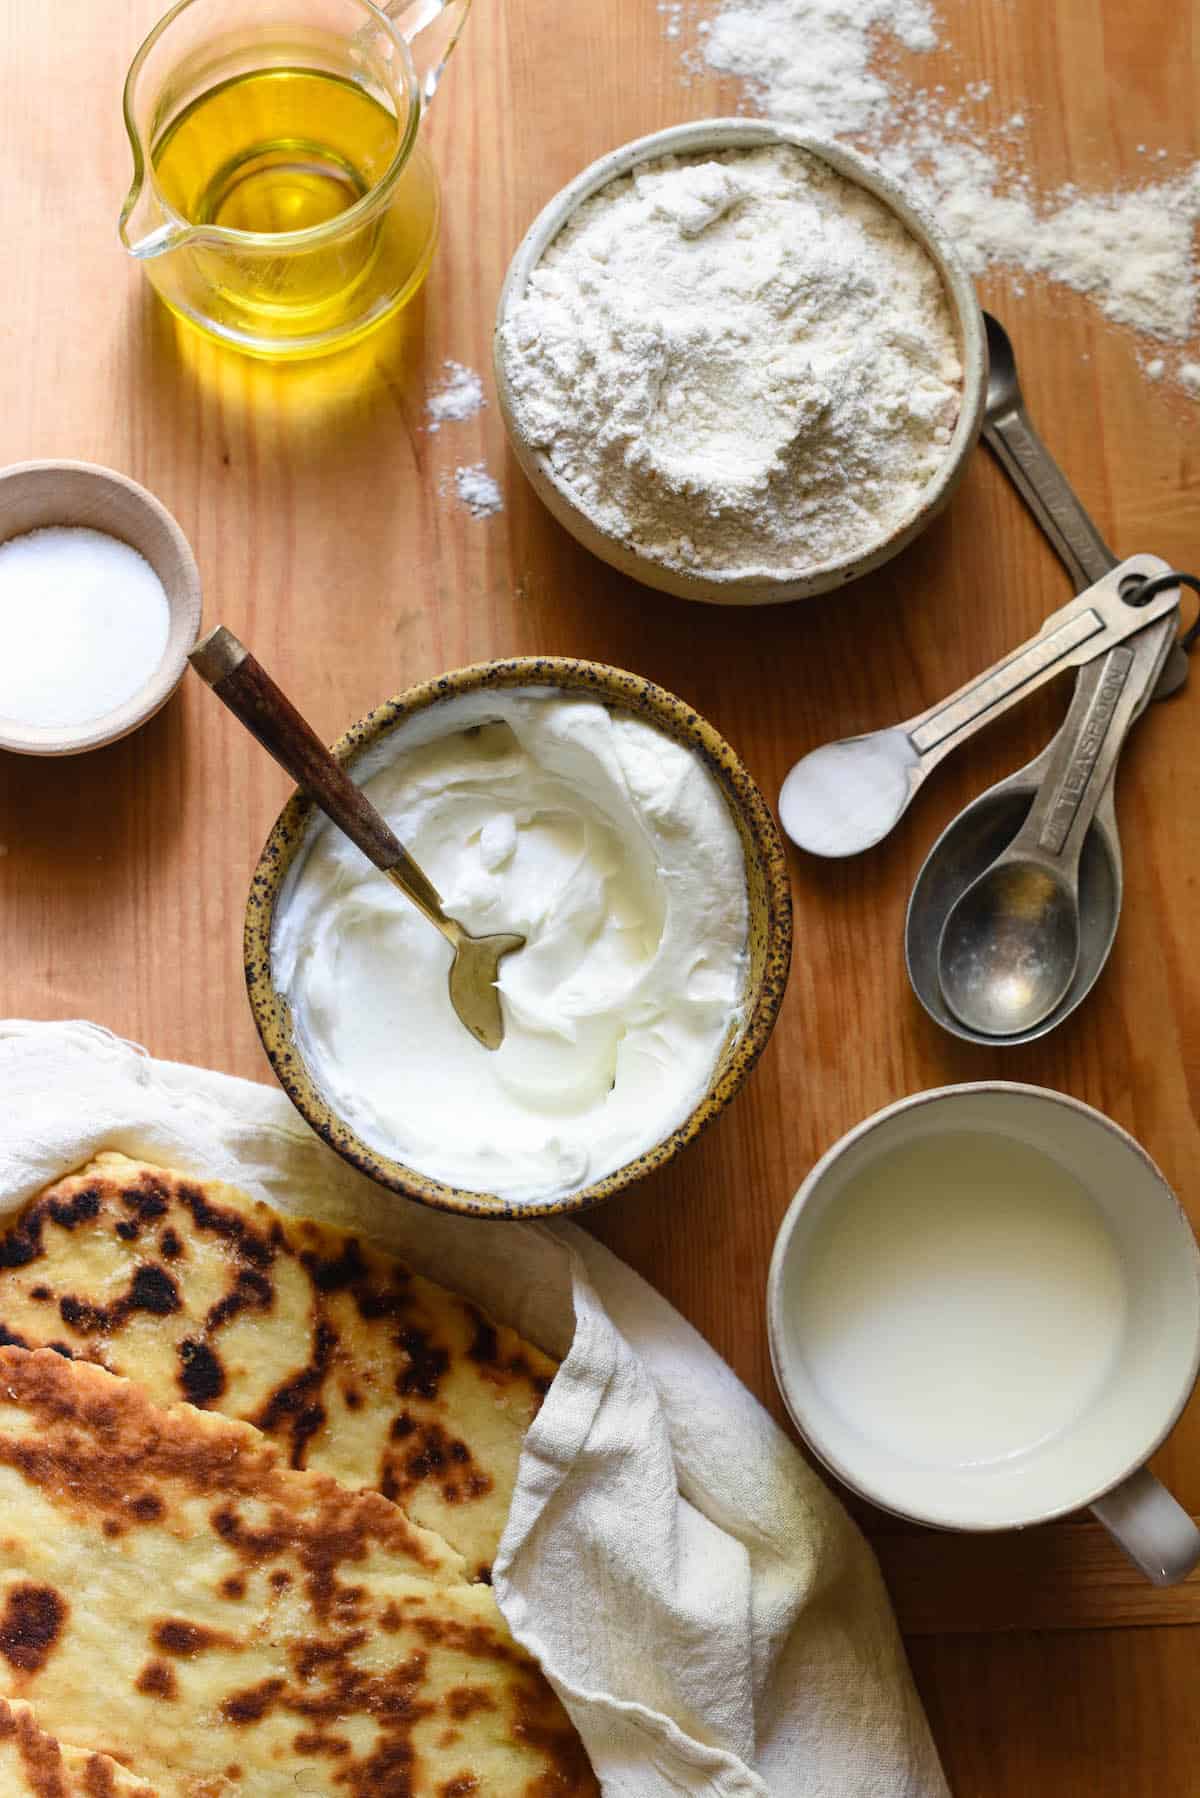 Overhead image of ingredients for homemade flat bread - olive oil, flour, baking soda, yogurt, milk and sugar. Finished flatbreads alongside.